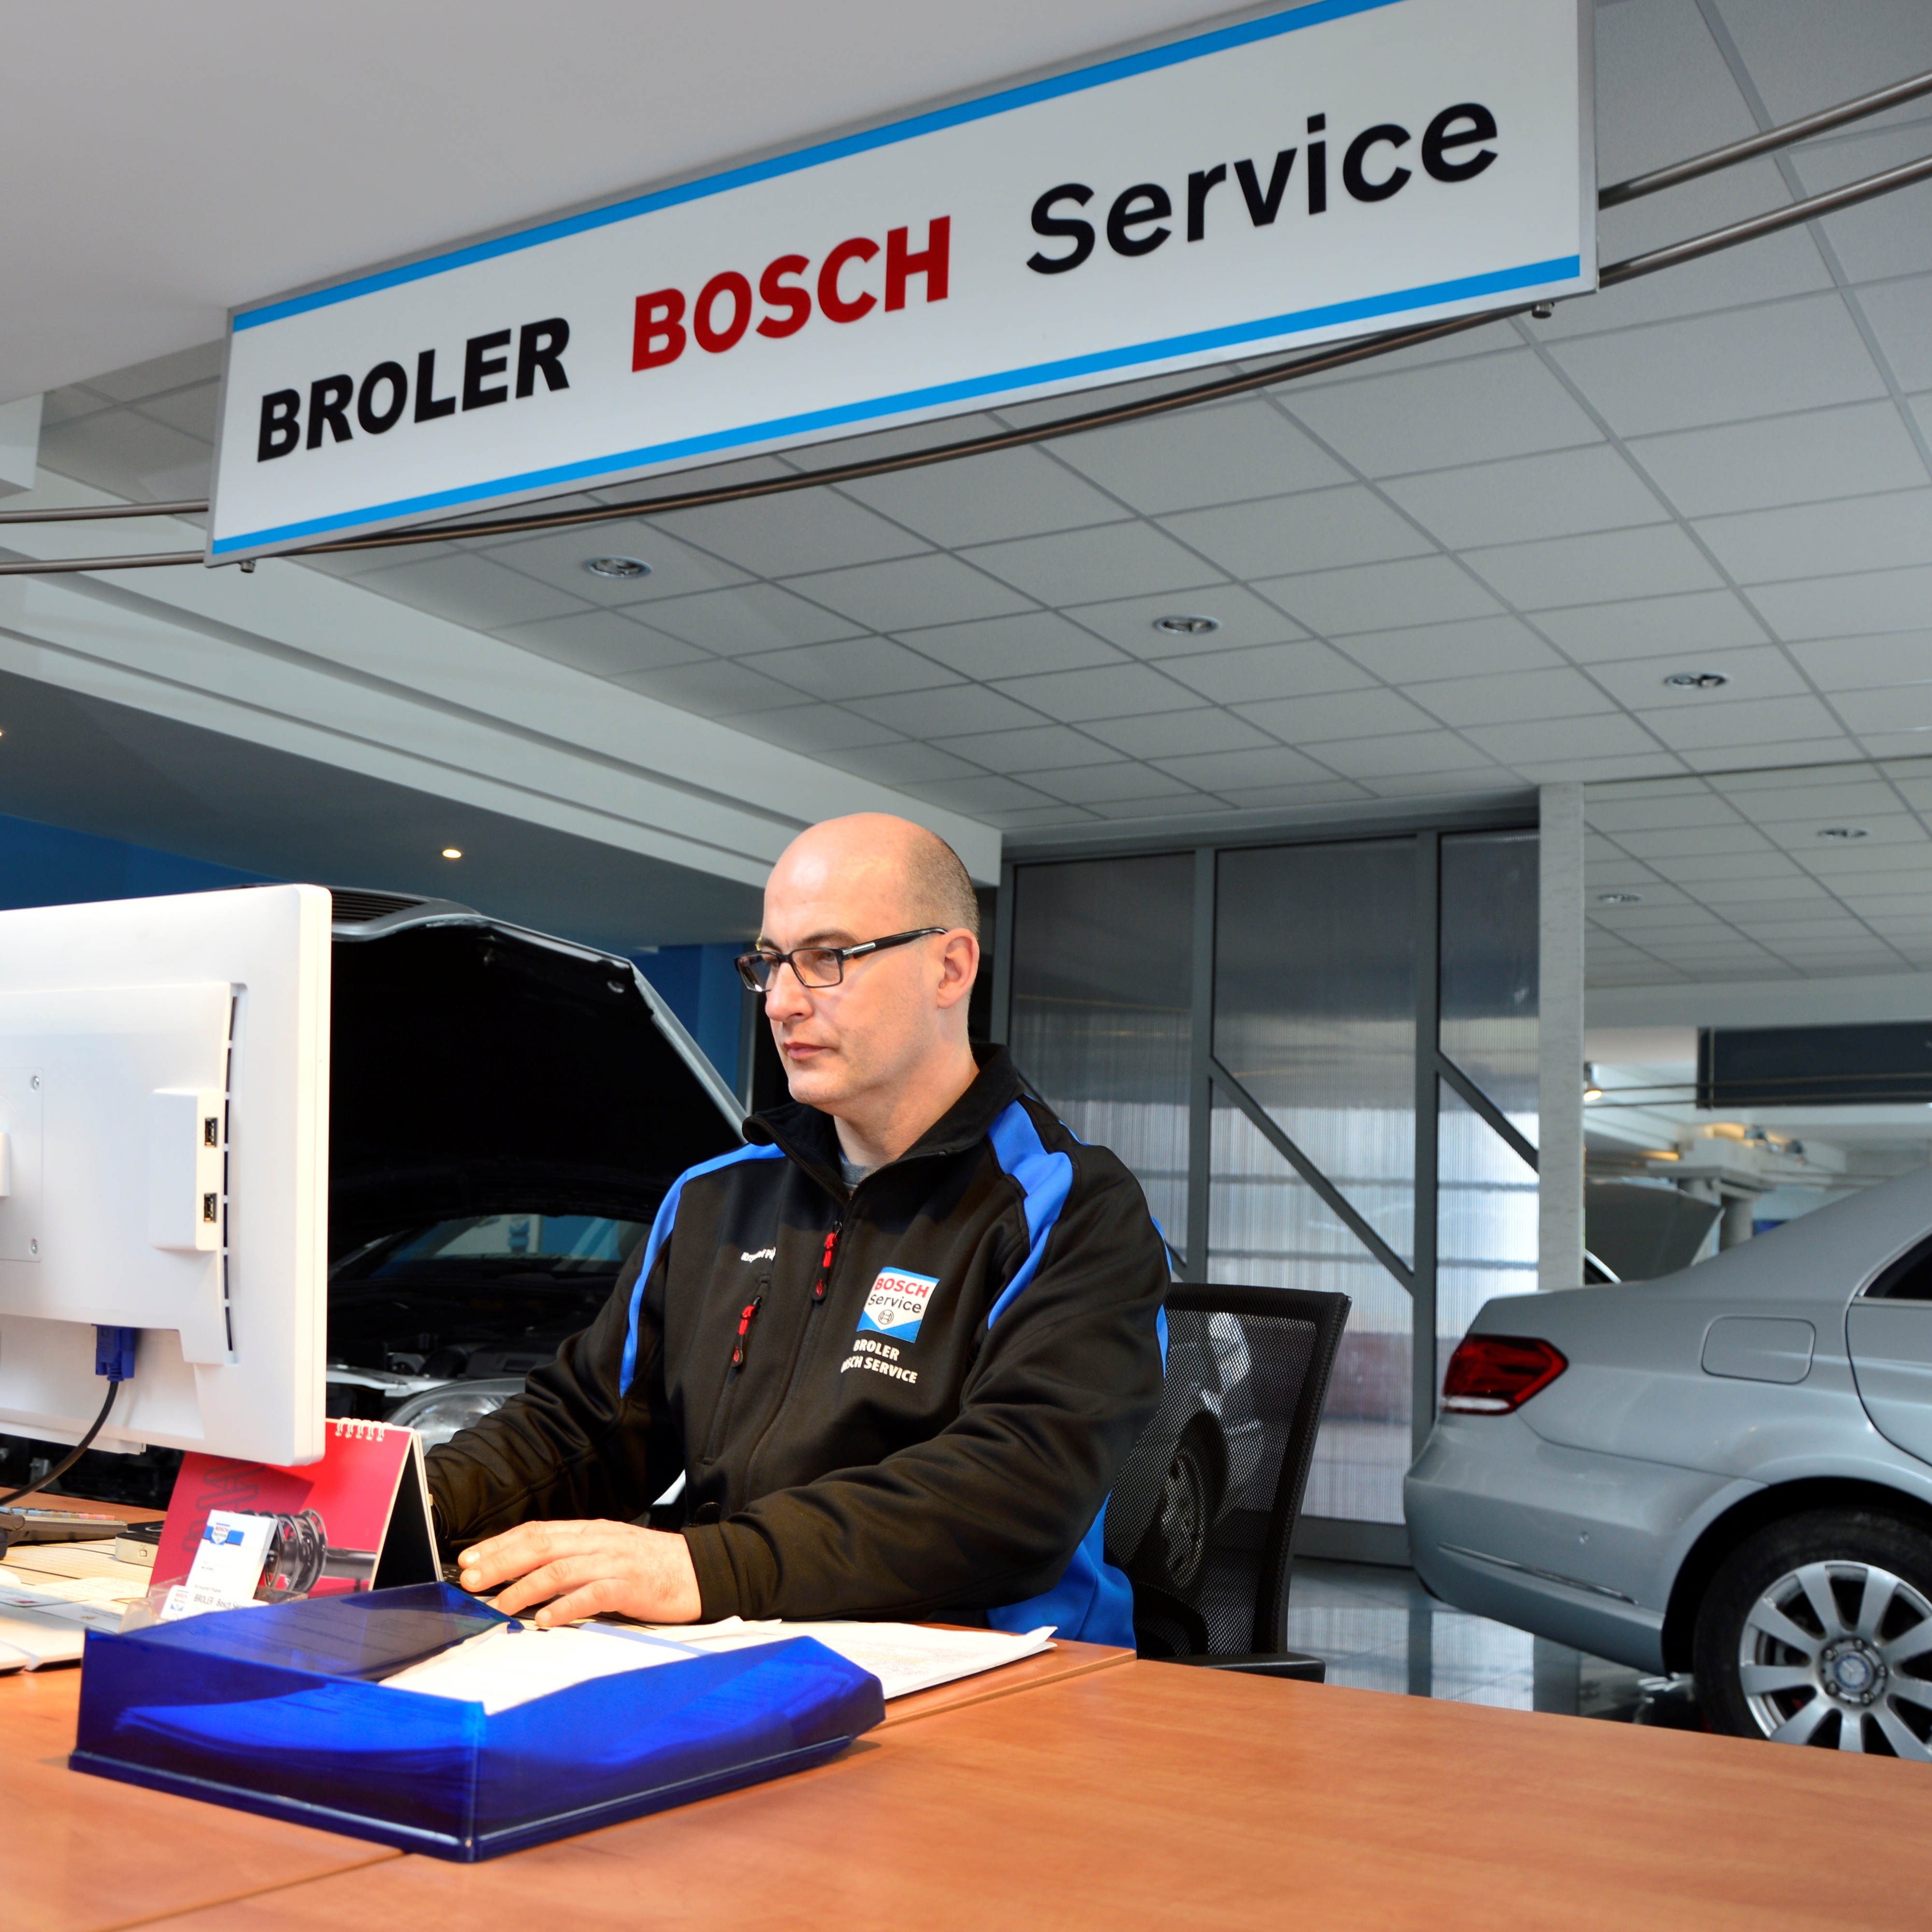 Autoryzacja firmy Broler Bosch Service